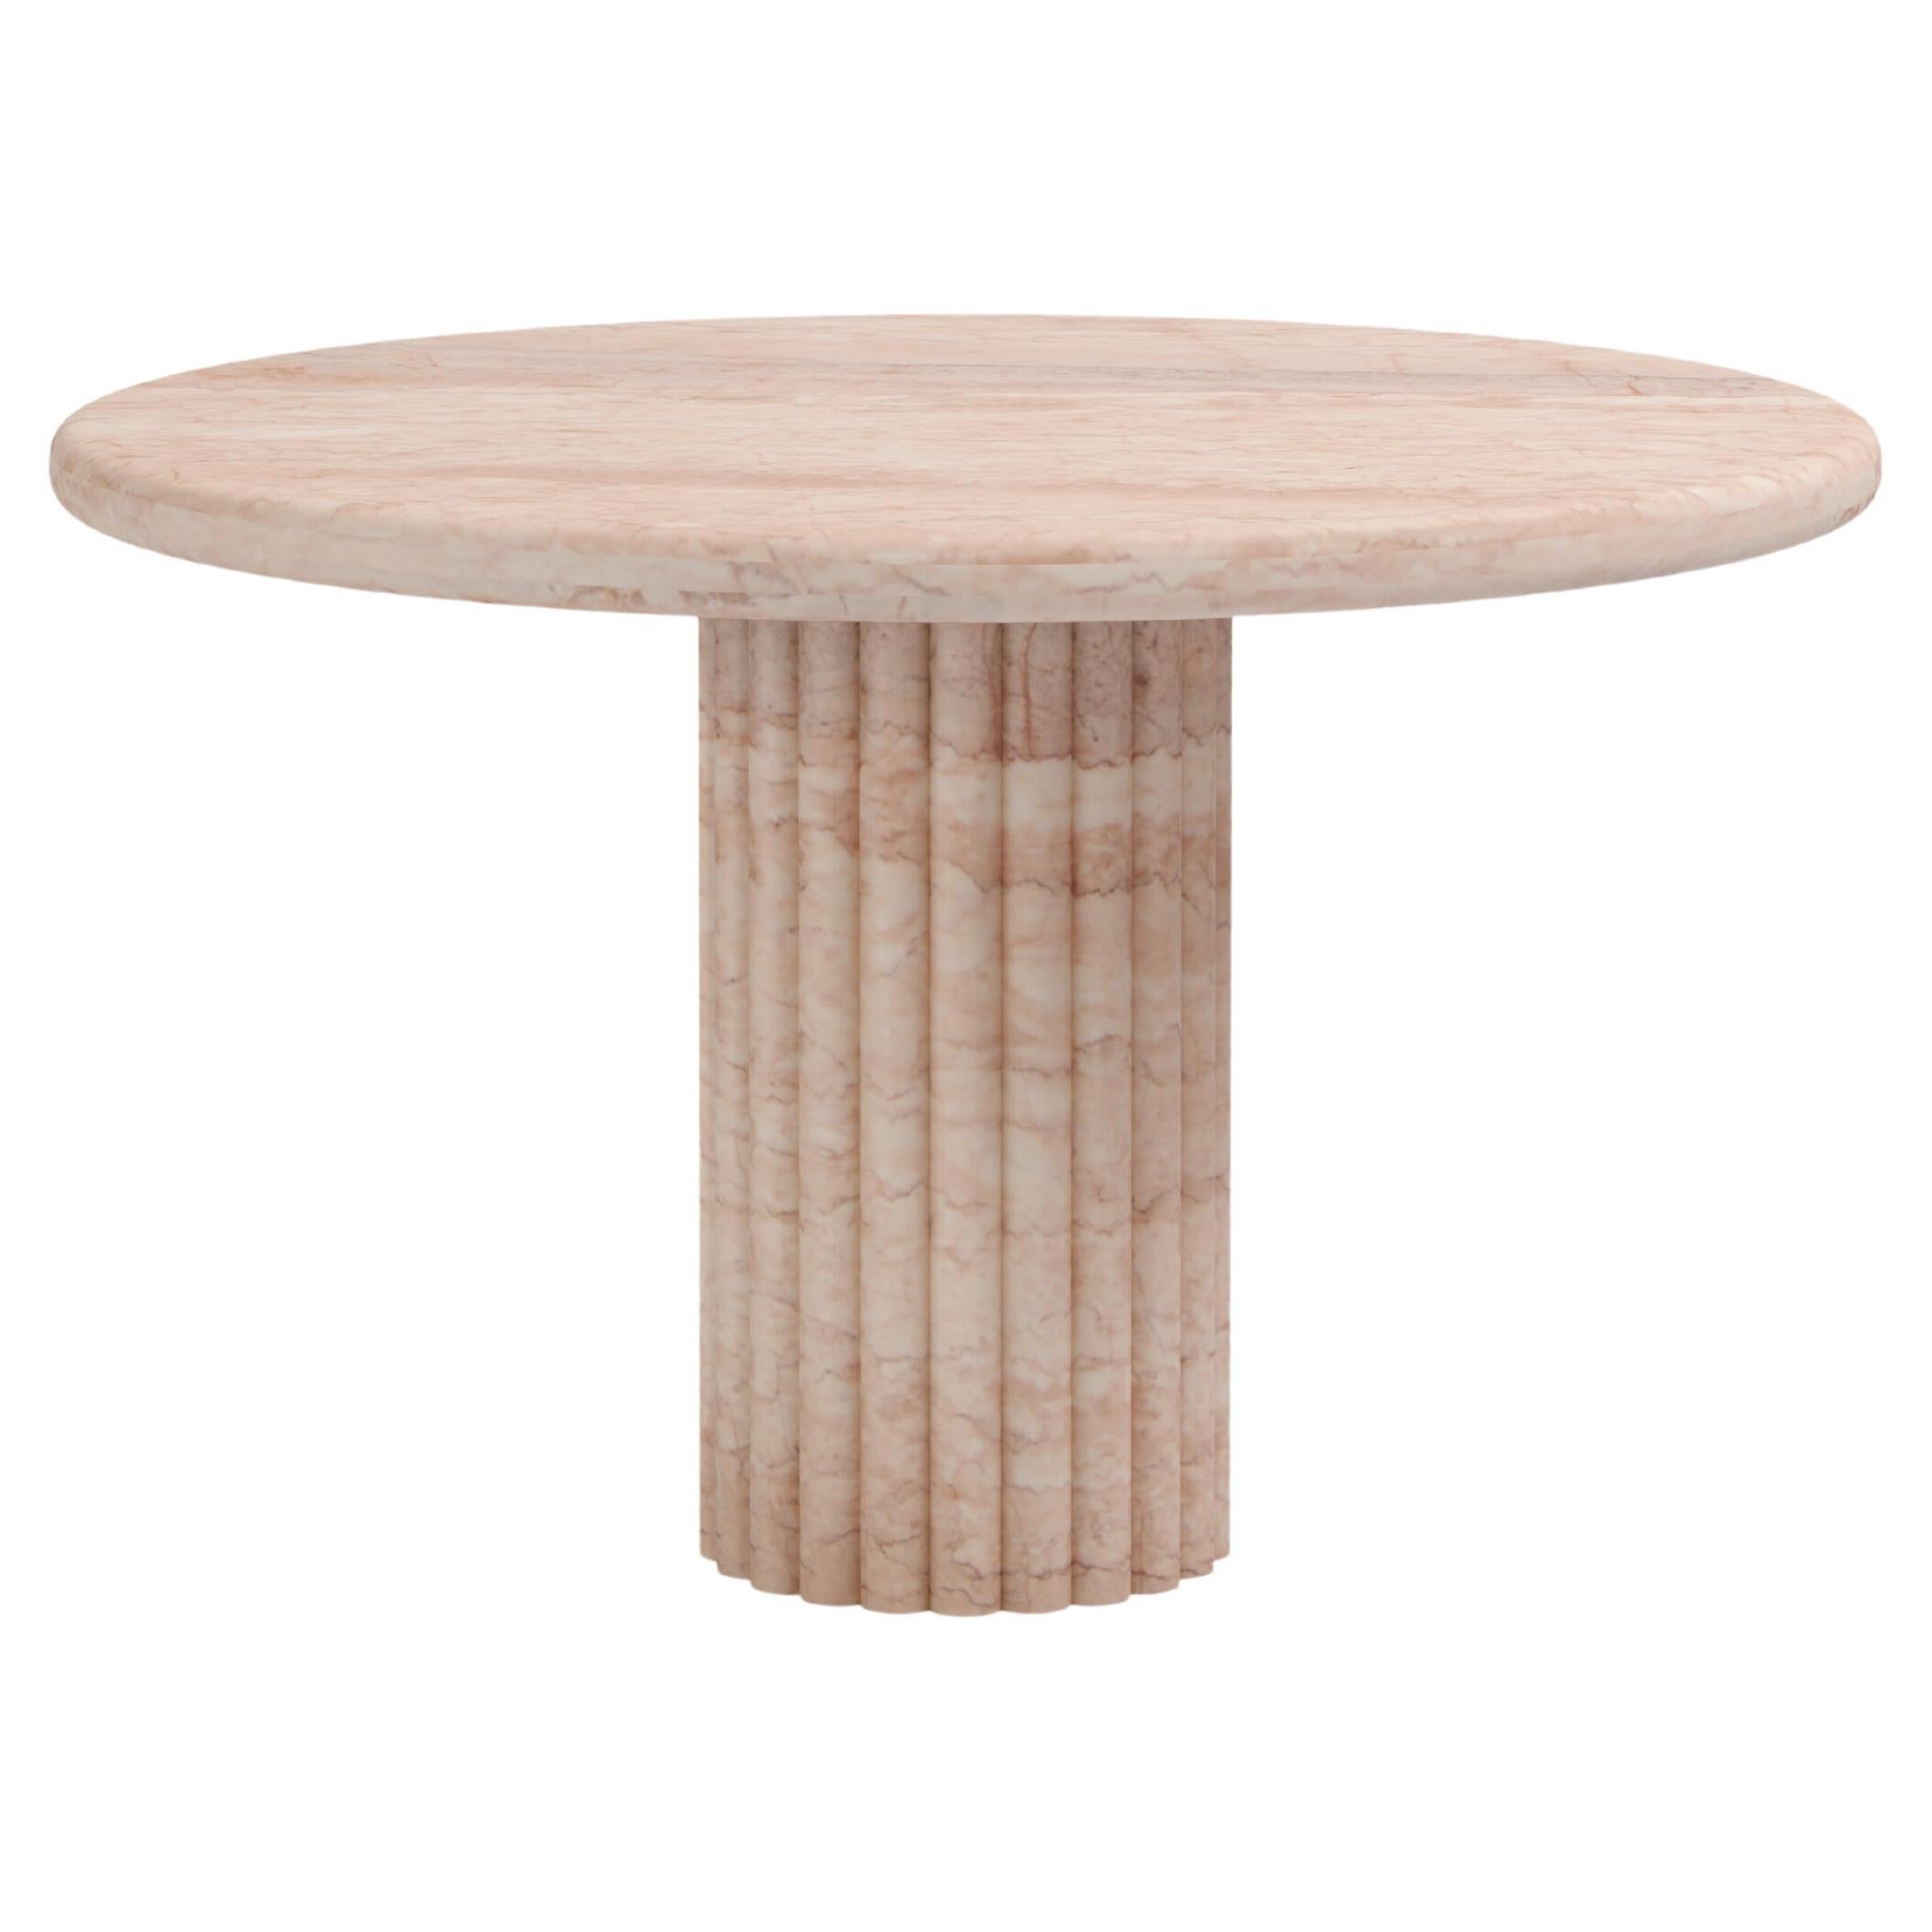 FORM(LA) Fluta Round Dining Table 60”L x 60”W x 30”H Rosa Crema Marble For Sale